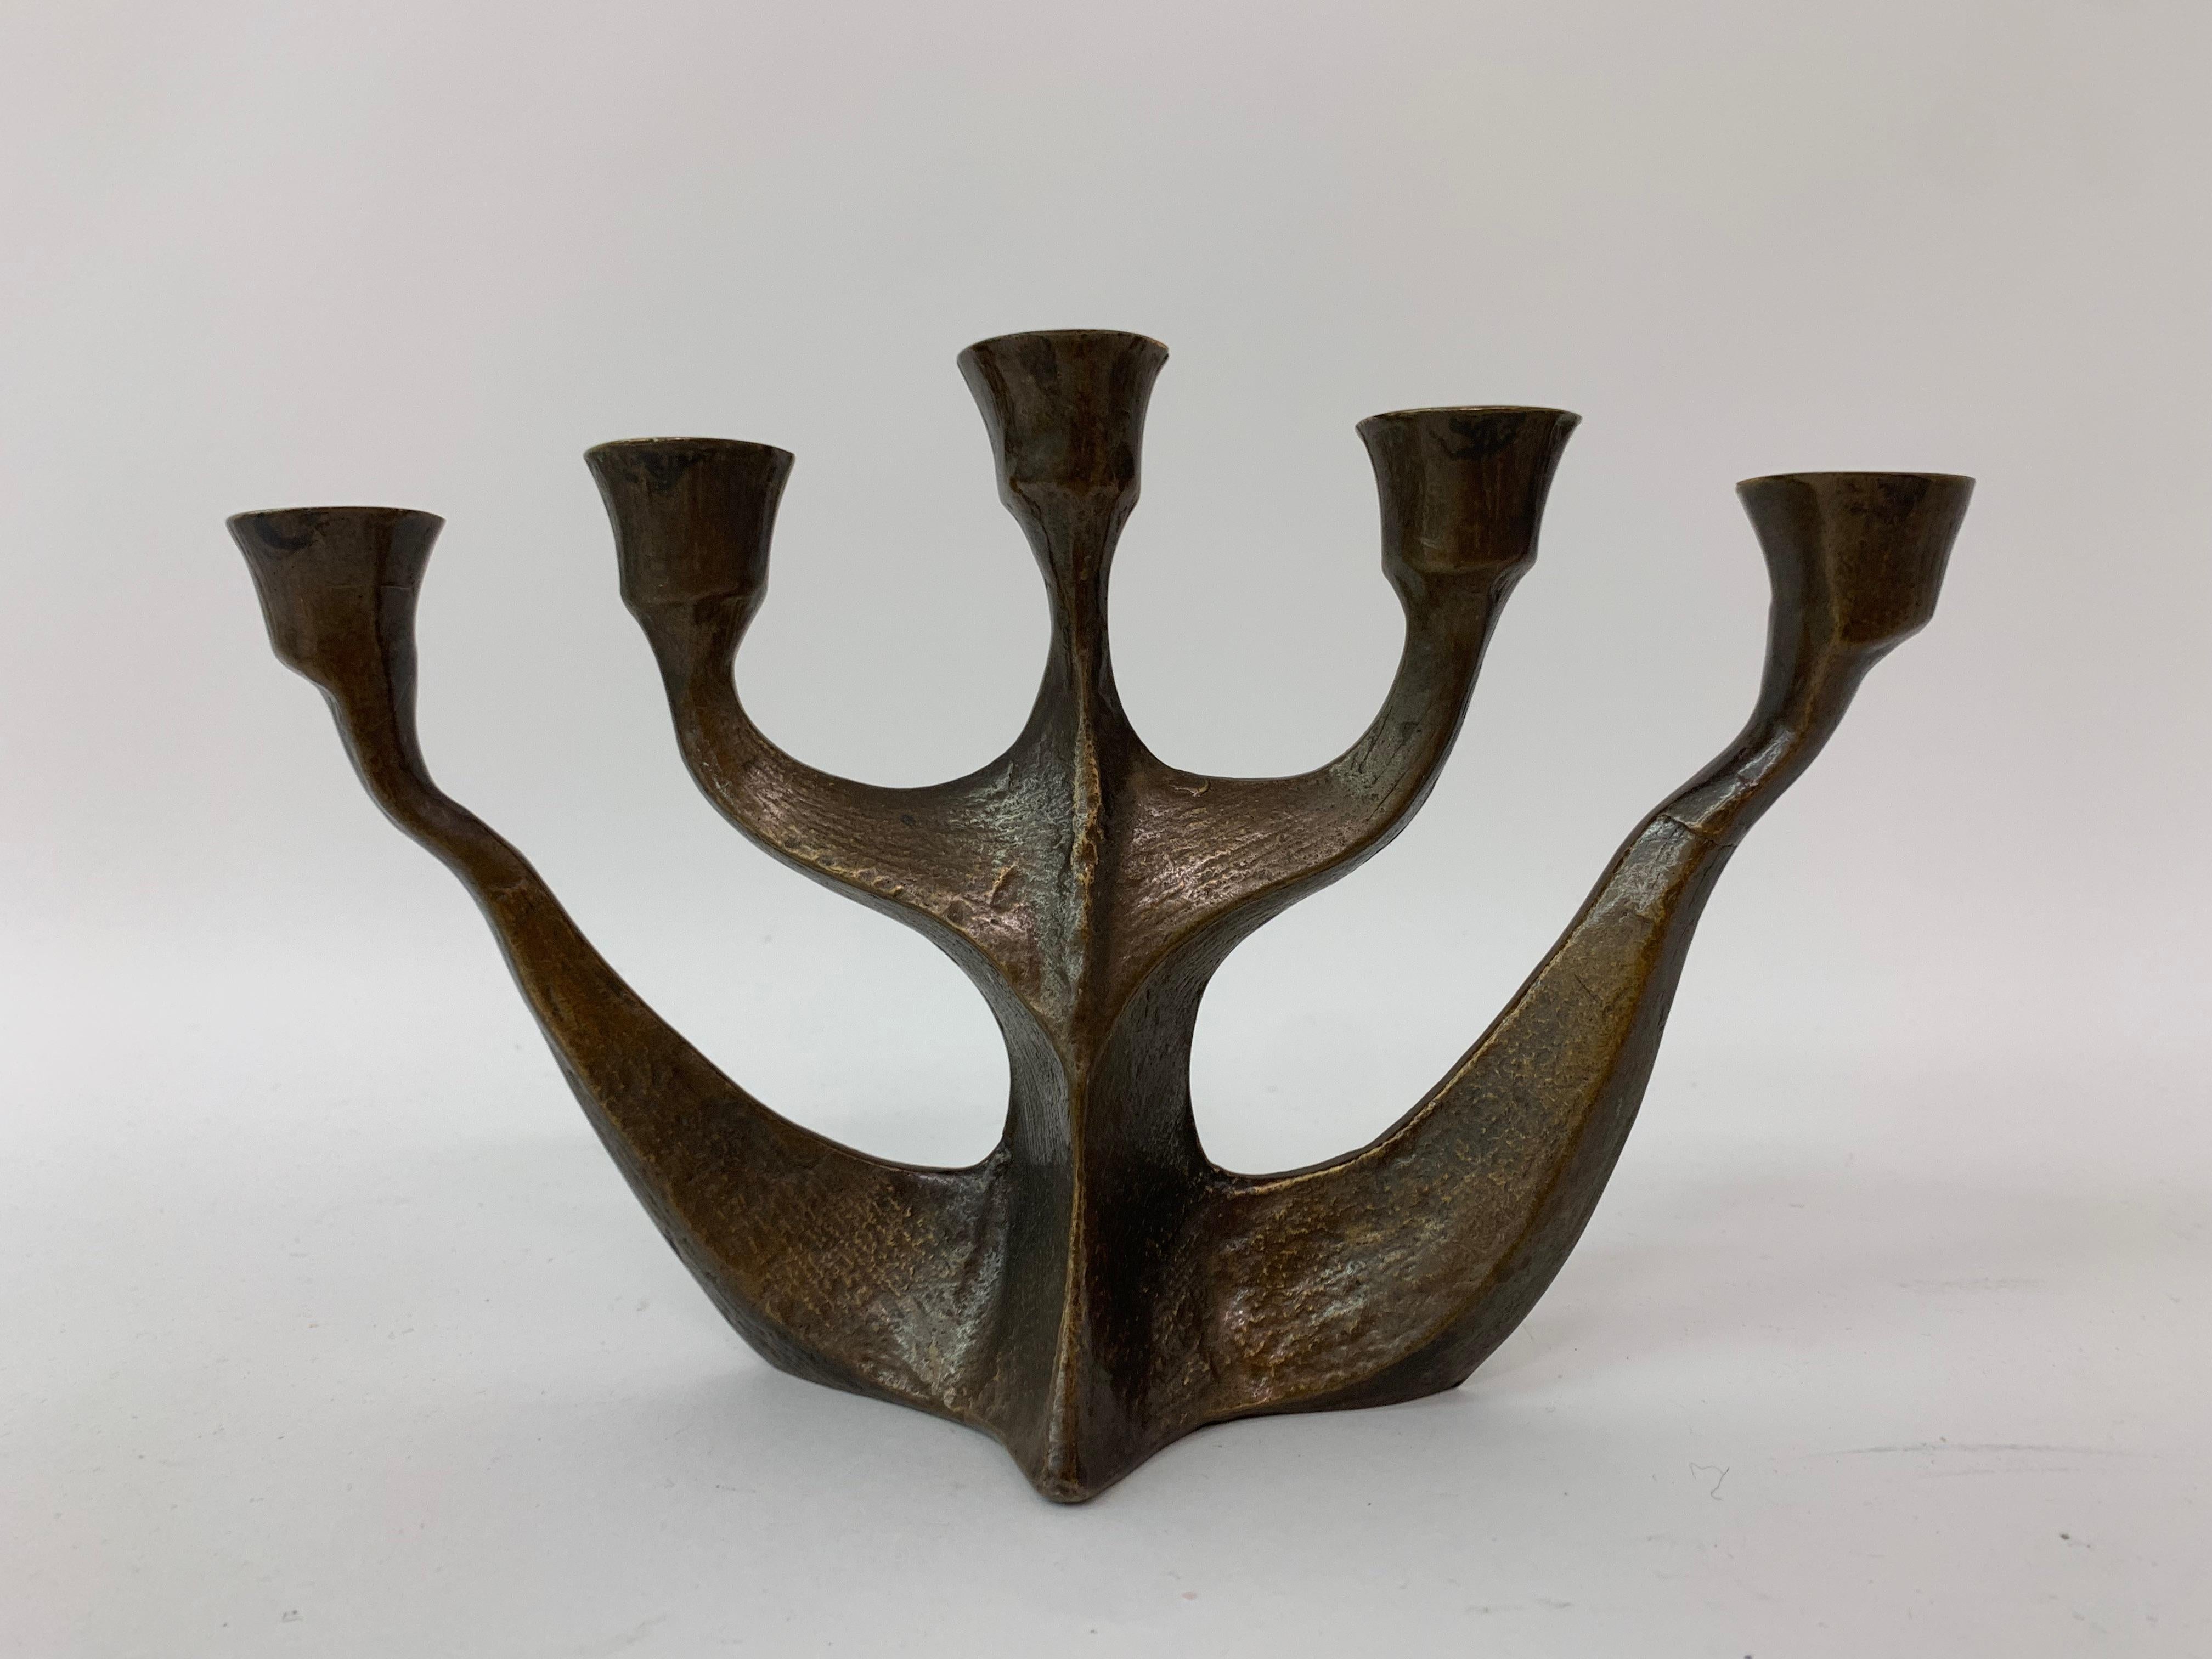 Dimensions: 26cm W, 16,5cm H, 8,5cm D.
Material: Bronze.
Designer: Horst Dalbeck.
Period: 1970’s.
Origin: Germany.